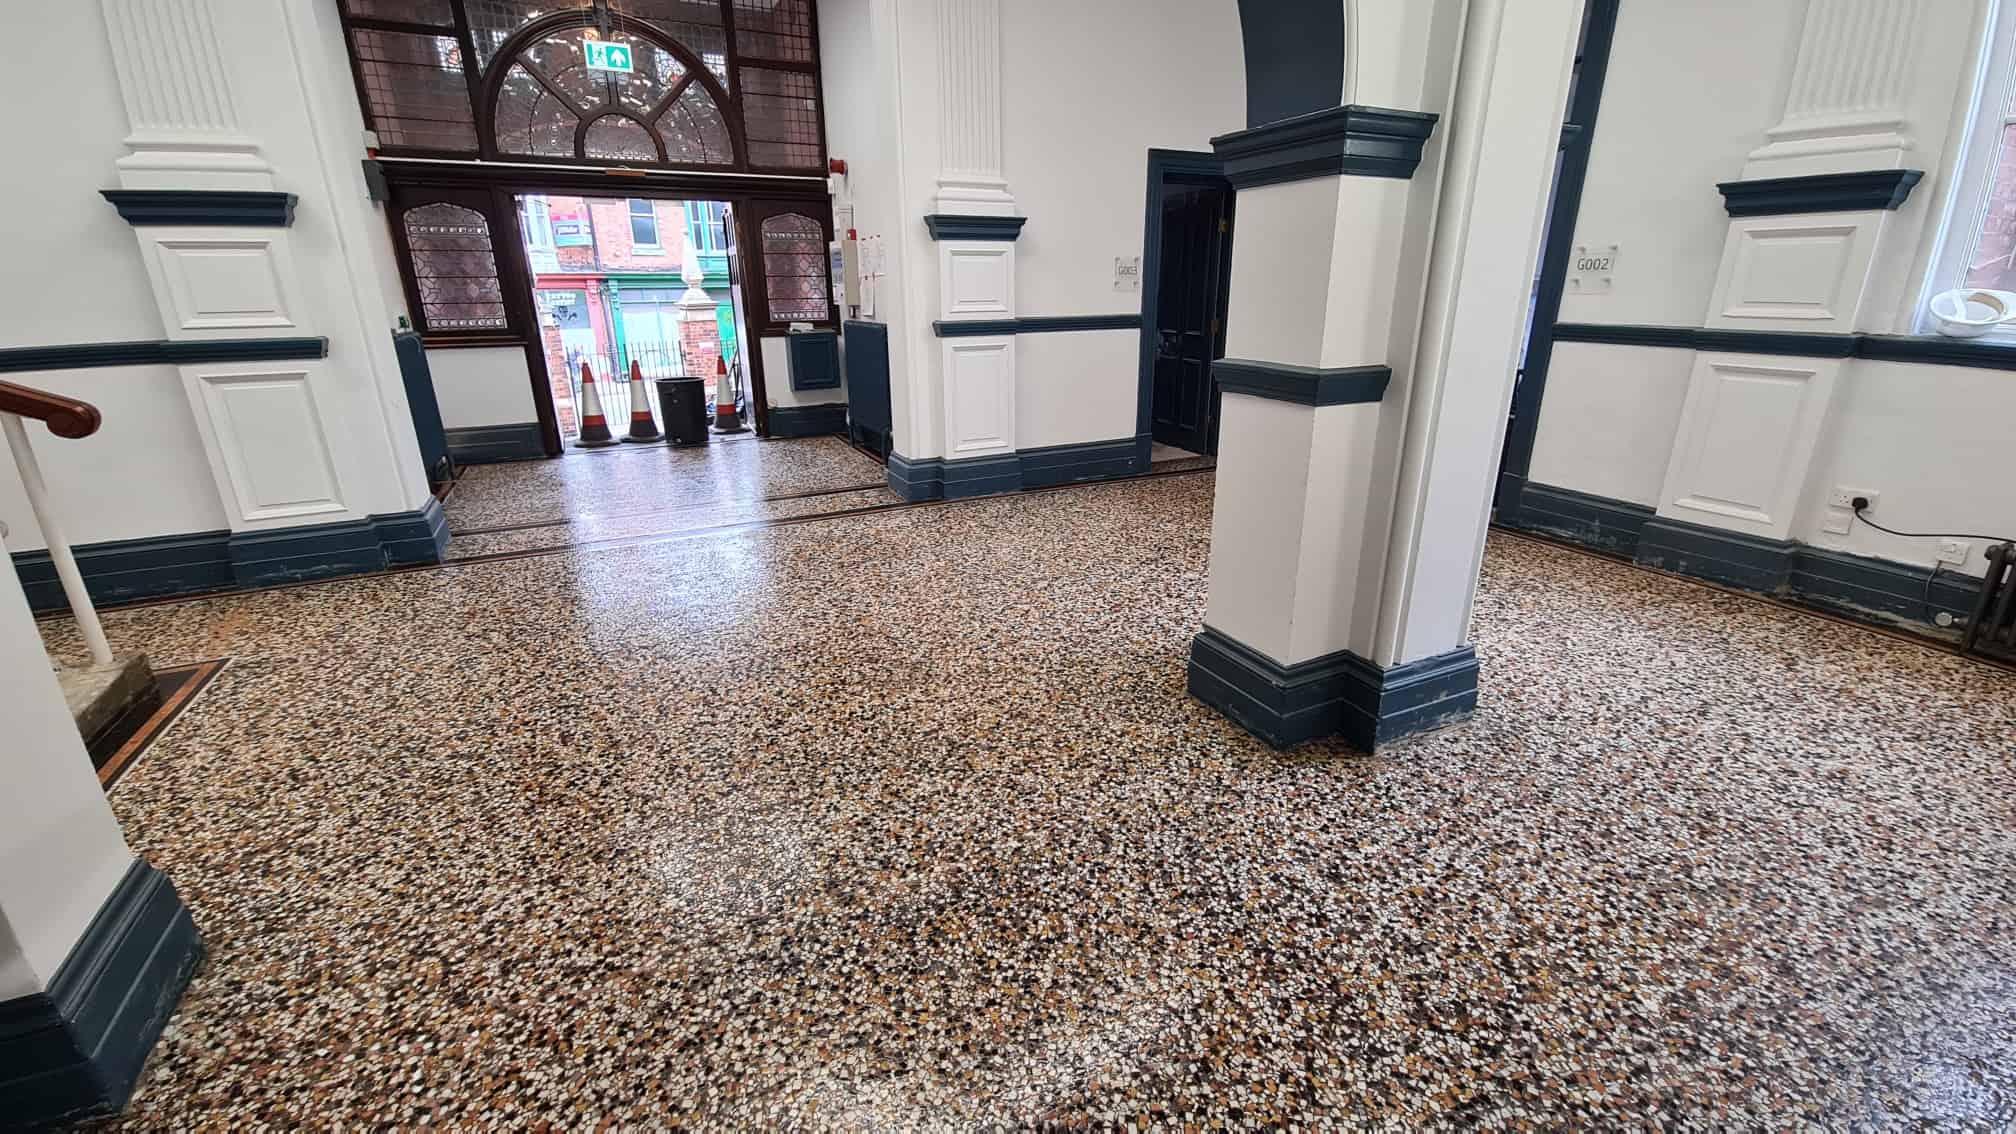 Mosaic Tiled Floor Lincoln College After Restoration